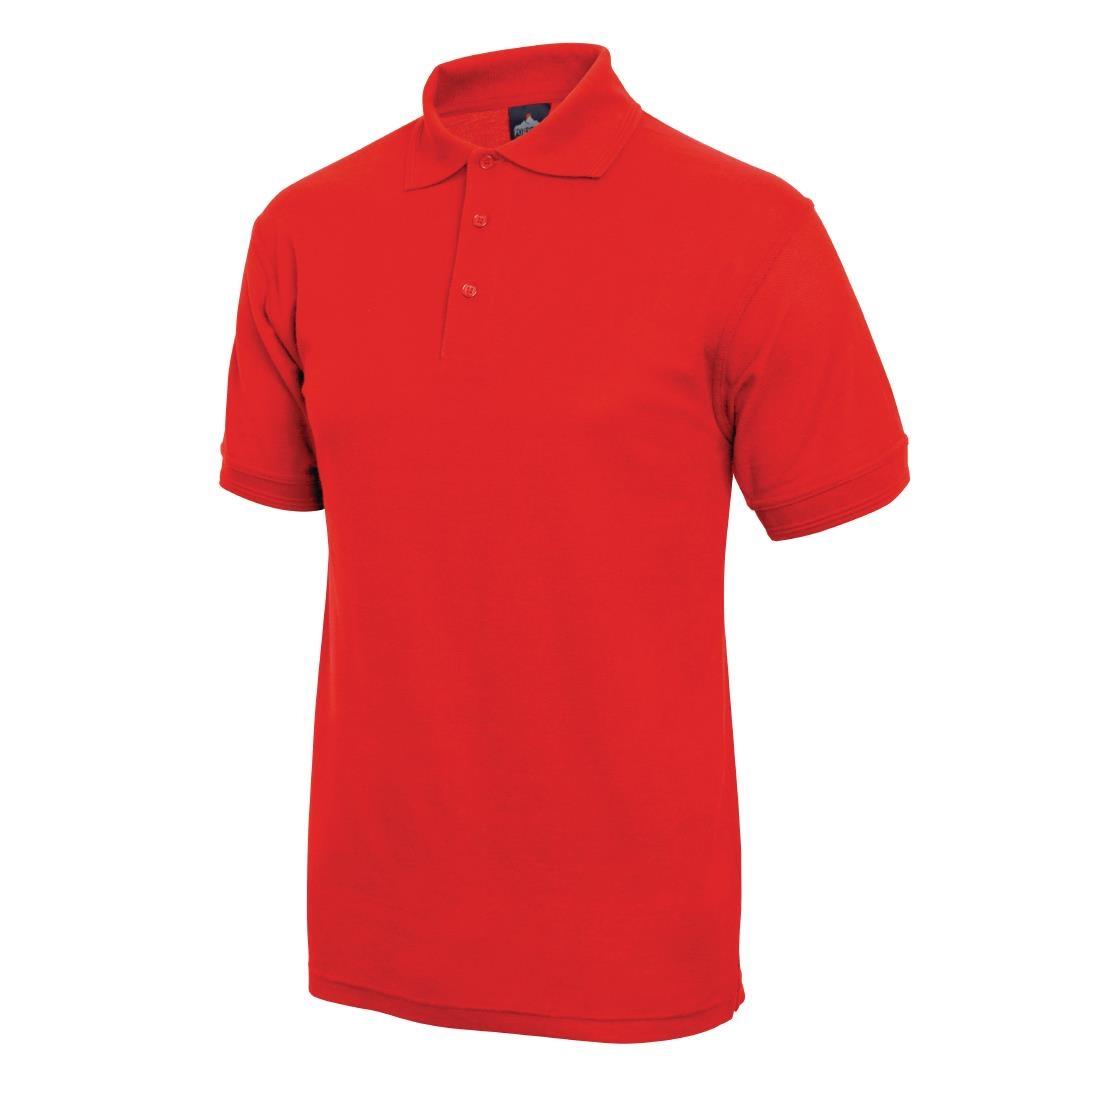 Unisex Polo Shirt Red XL - A762-XL  - 2